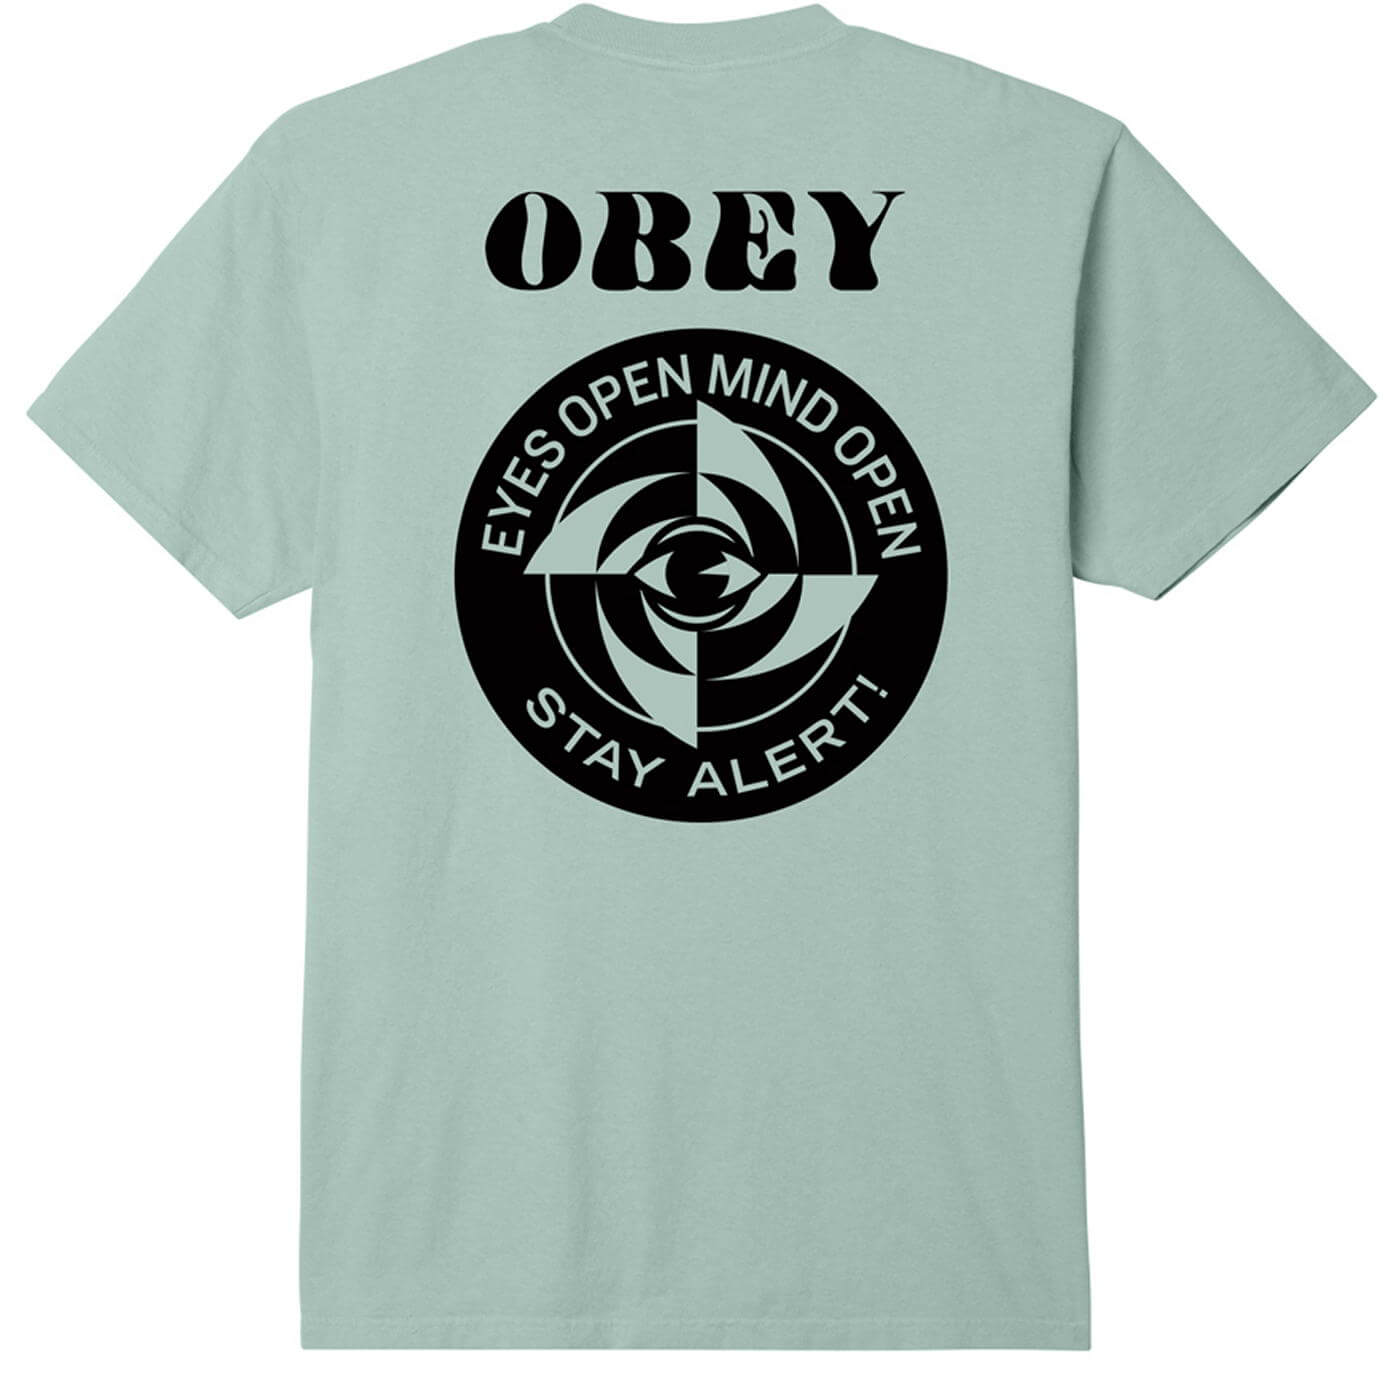 Obey Stay Alert T-Shirt - Surf Spray